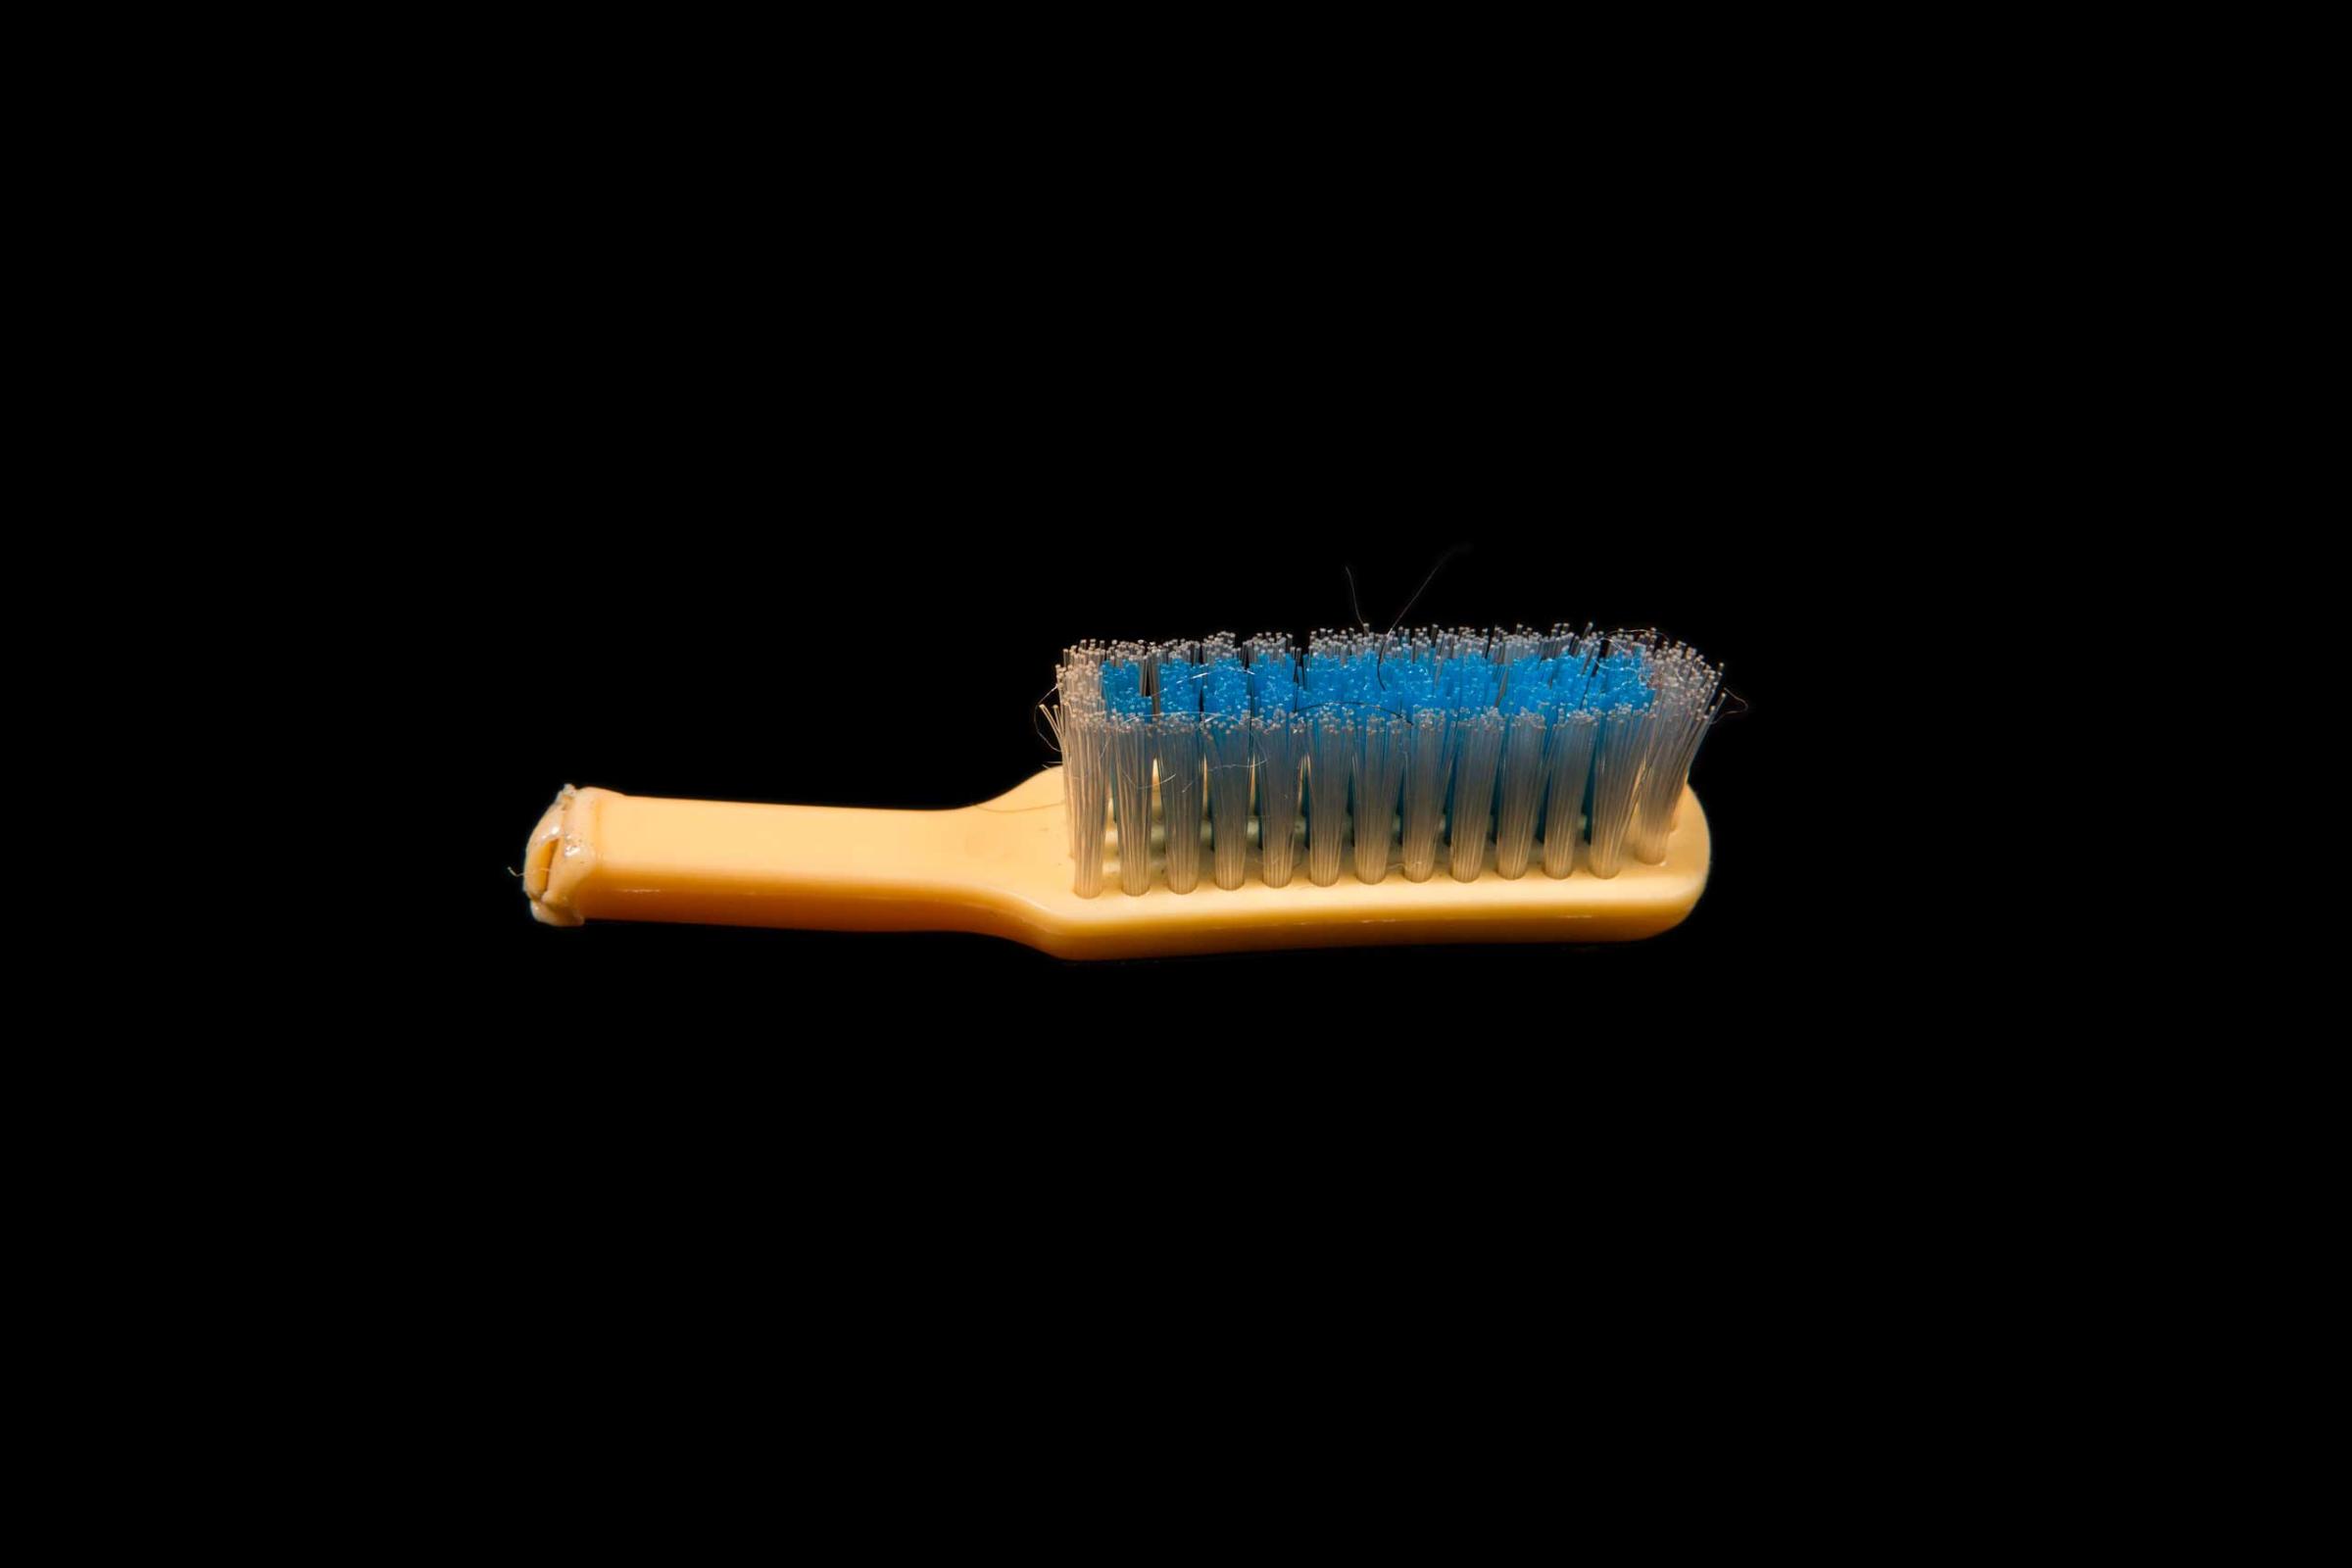 ISIS toothbrush